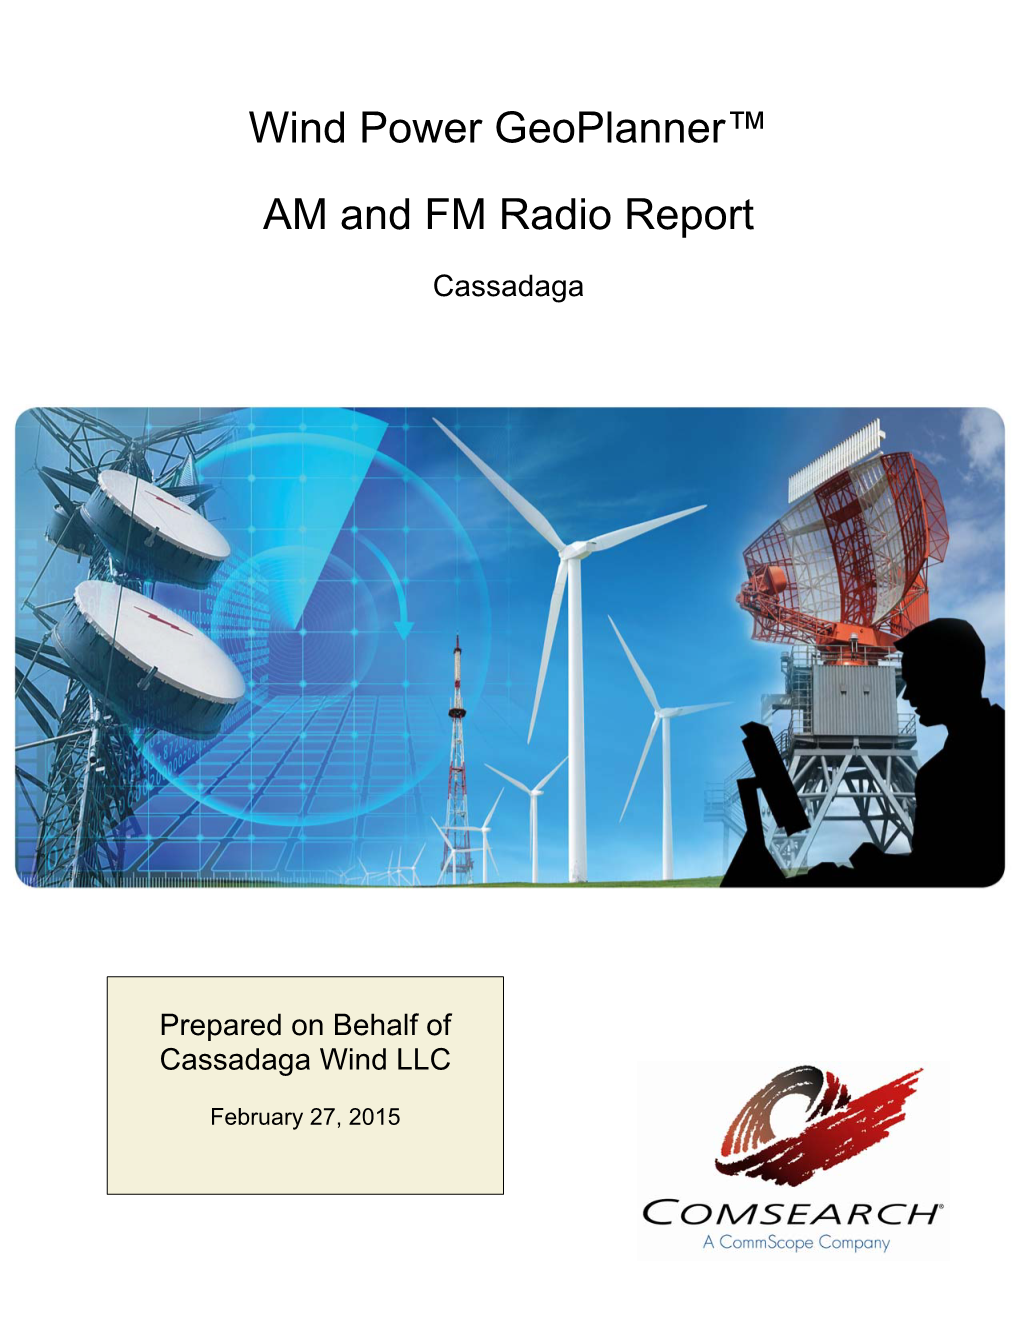 Wind Power Geoplanner™ AM and FM Radio Report Cassadaga